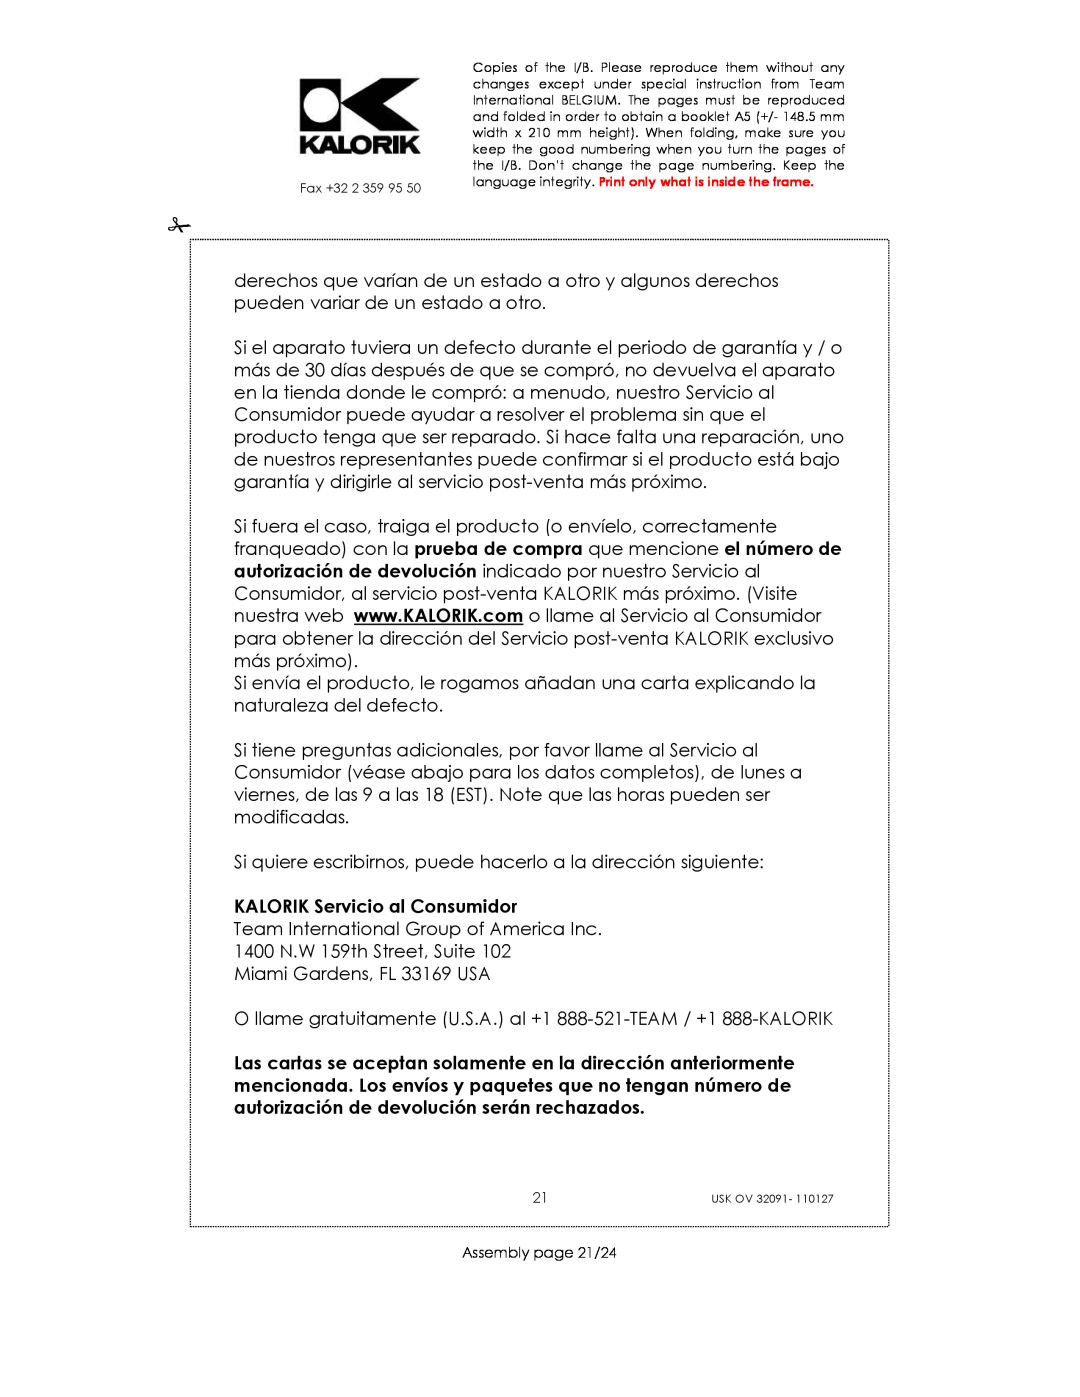 Kalorik USK OV 32091 manual KALORIK Servicio al Consumidor, Assembly page 21/24 